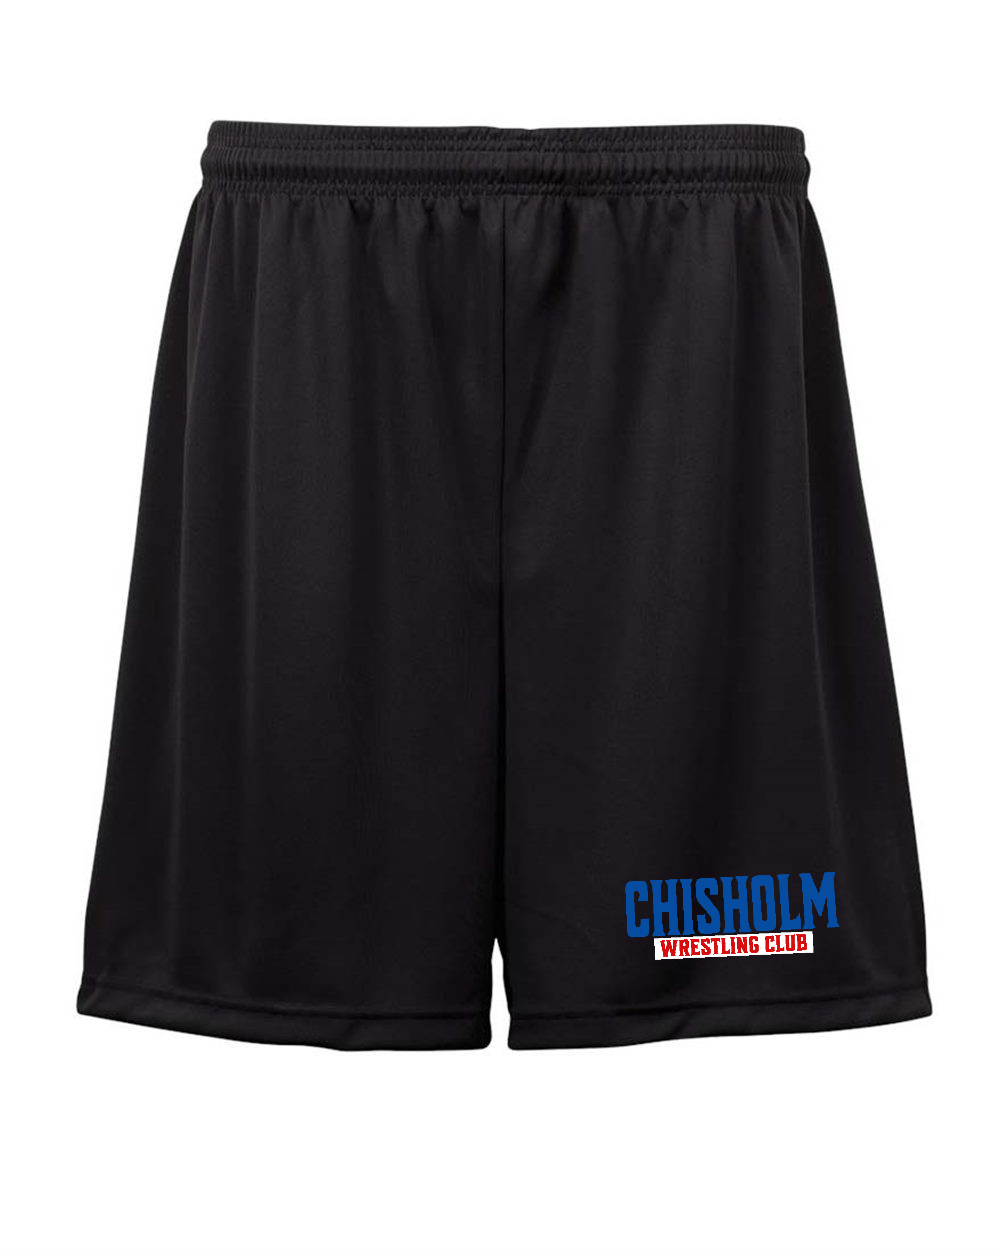 Chisholm Wrestling Club - Youth Shorts